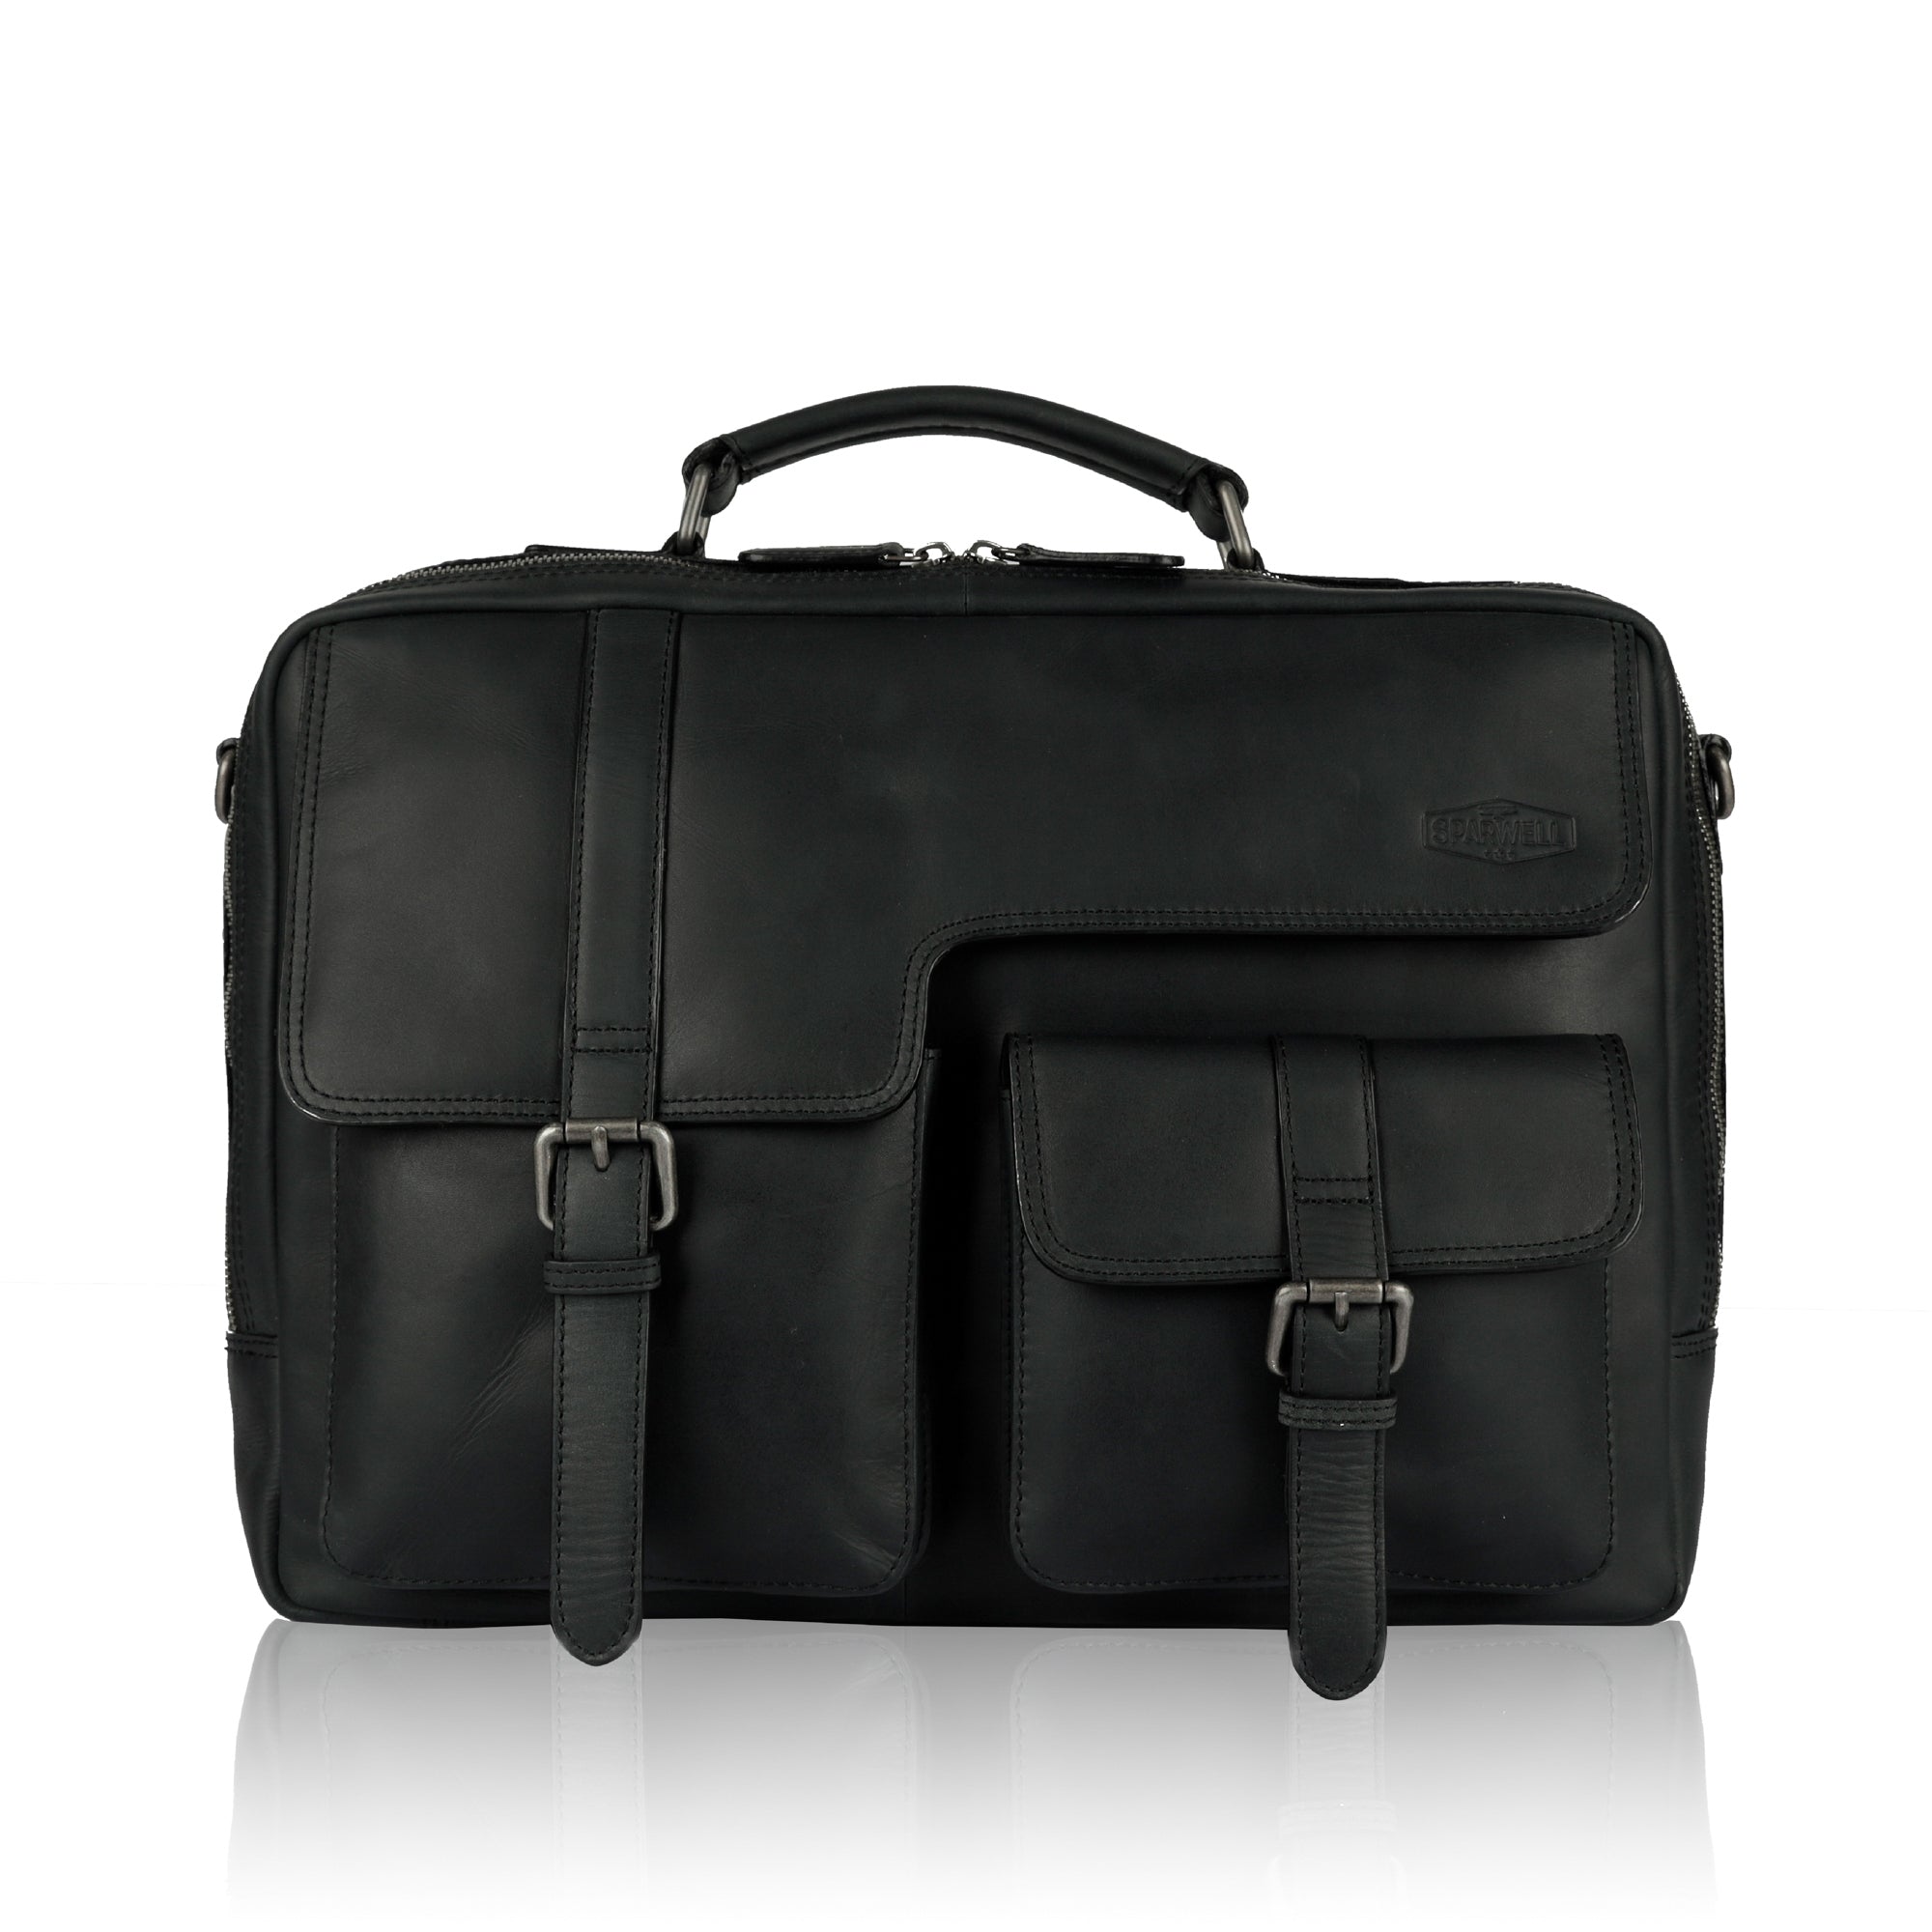 Luc - leather business bag / laptop bag